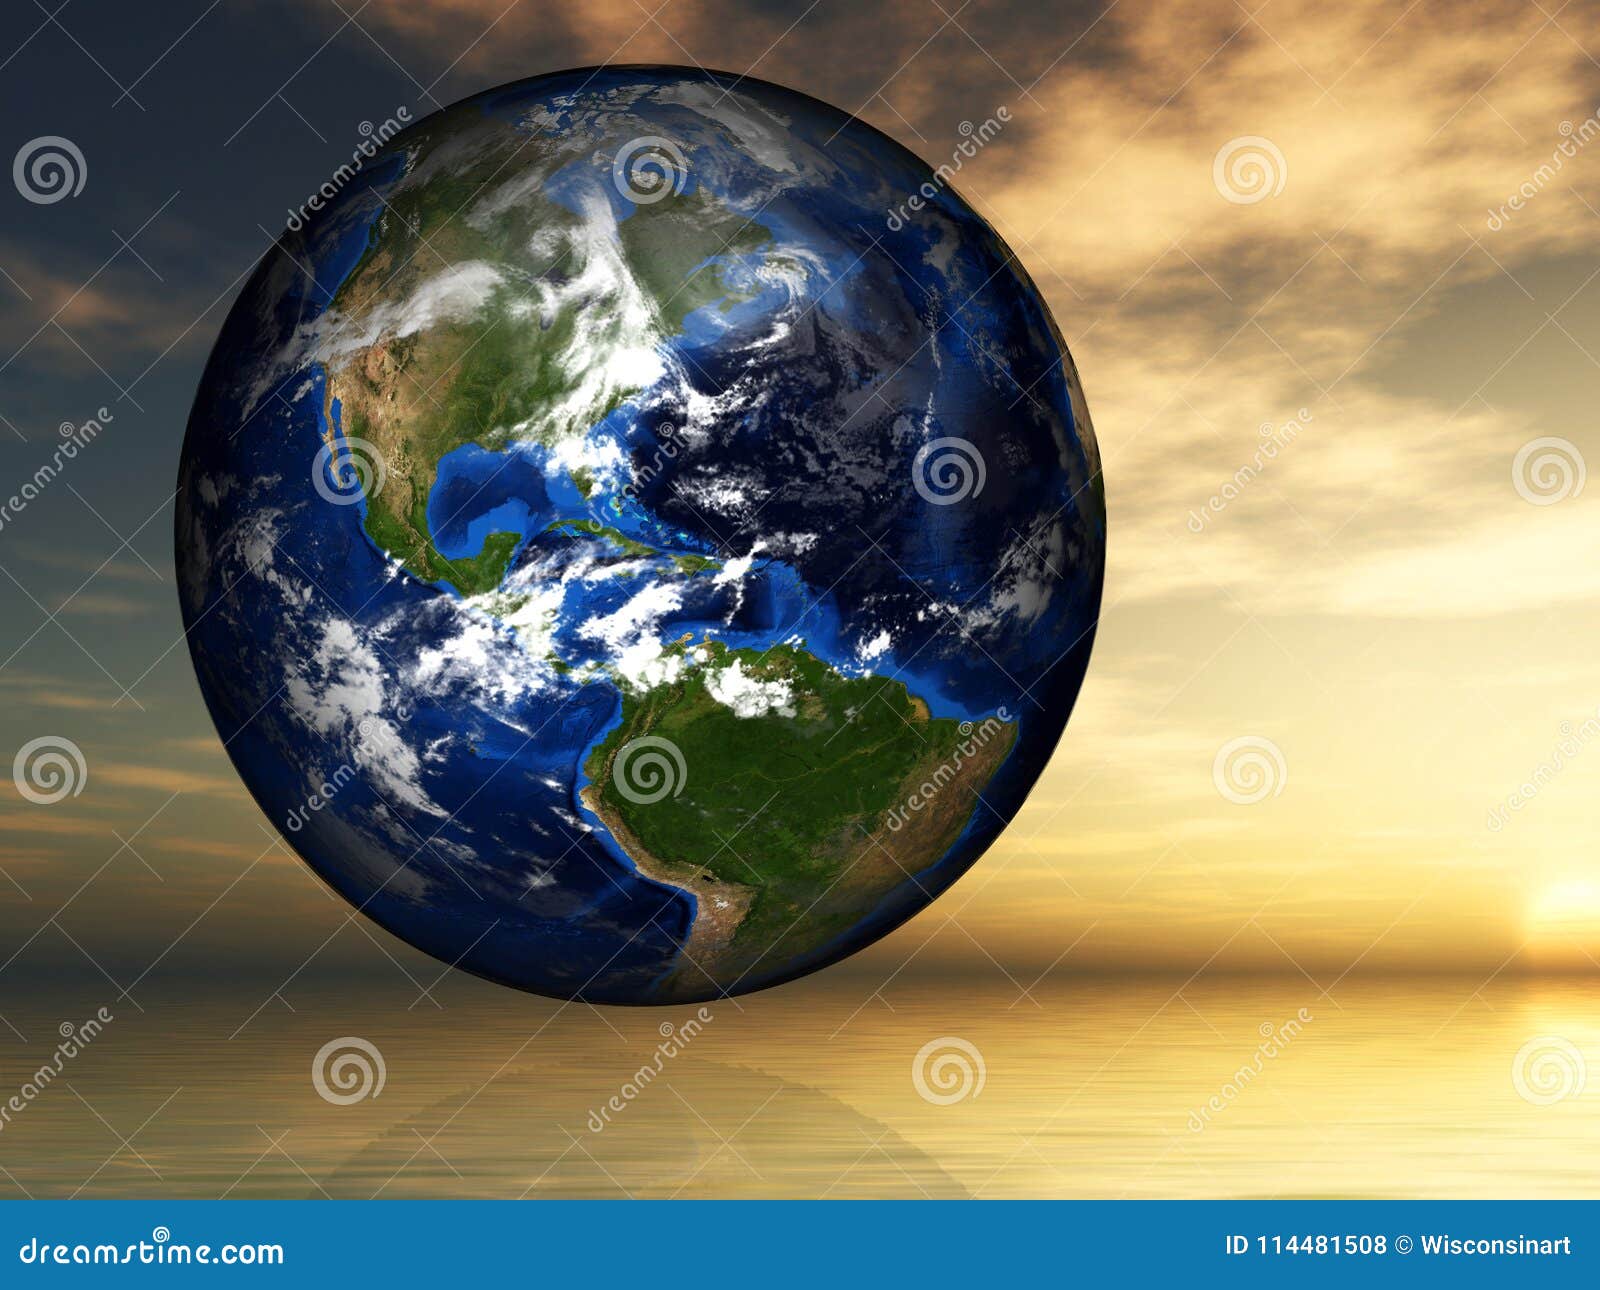 earth, environment, global warming, peace, hope